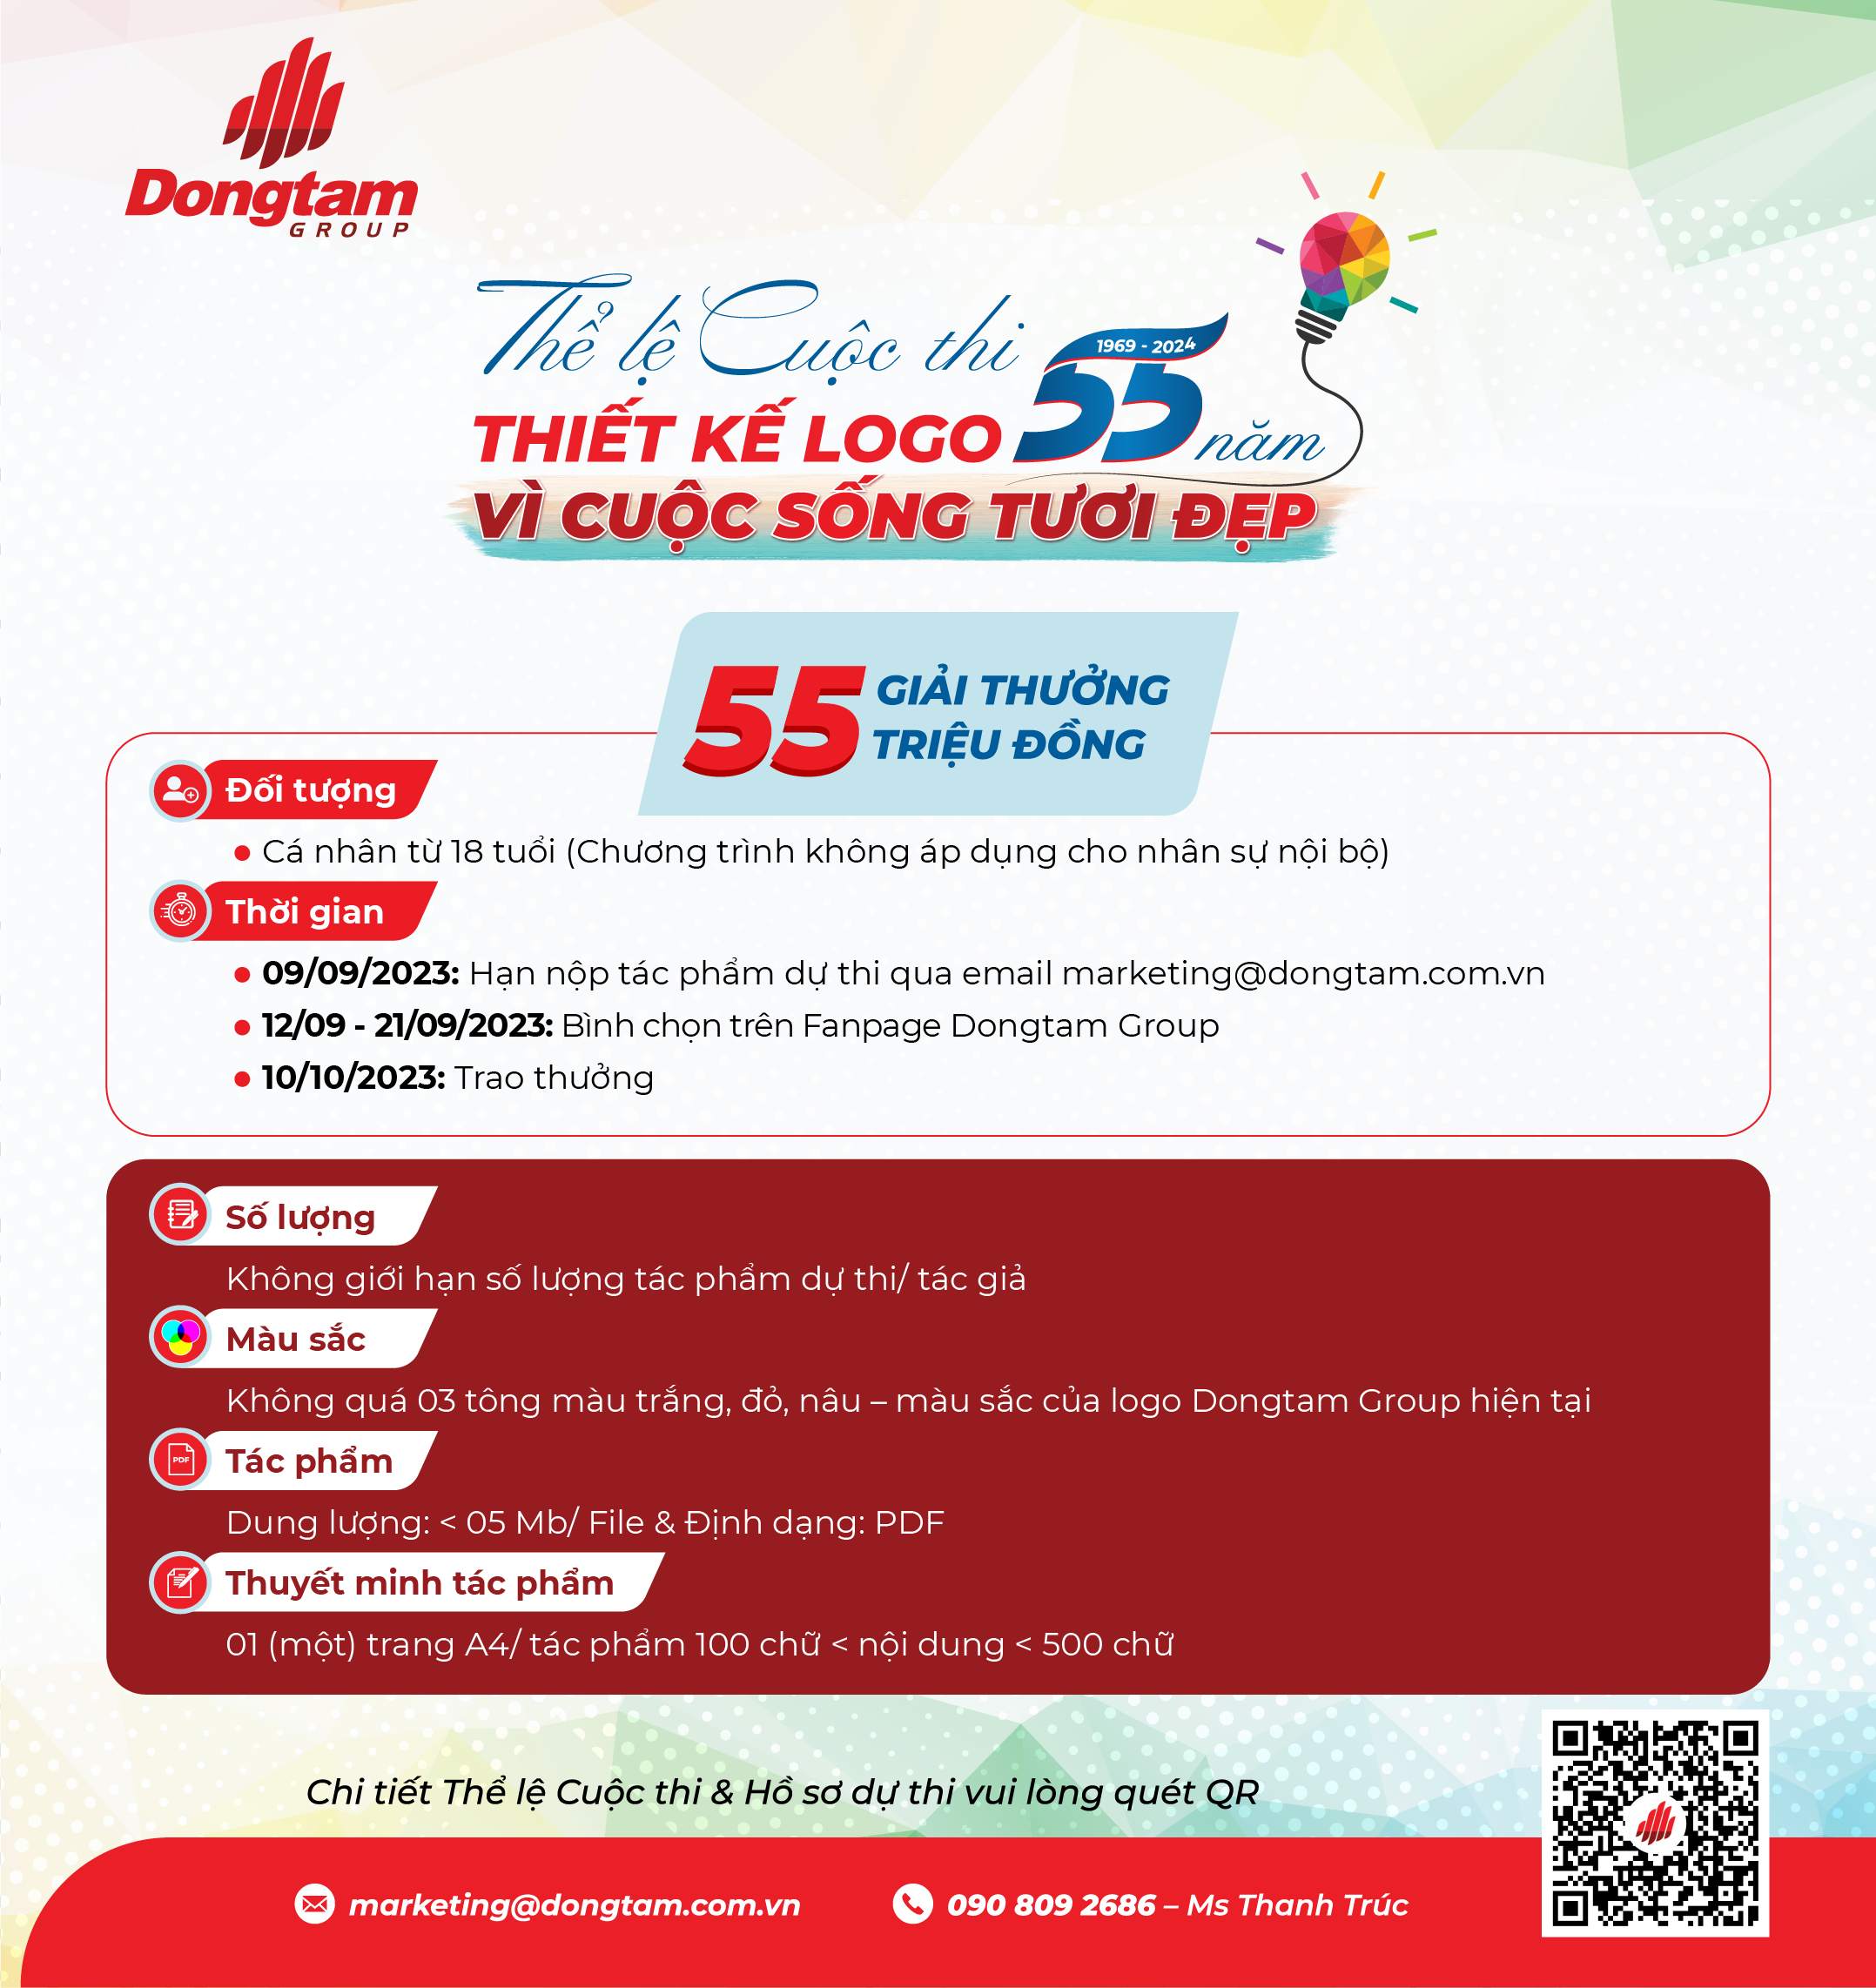 Cuoc thi thiet ke logo 55 nam Dongtam Group The le Hinh trong 2